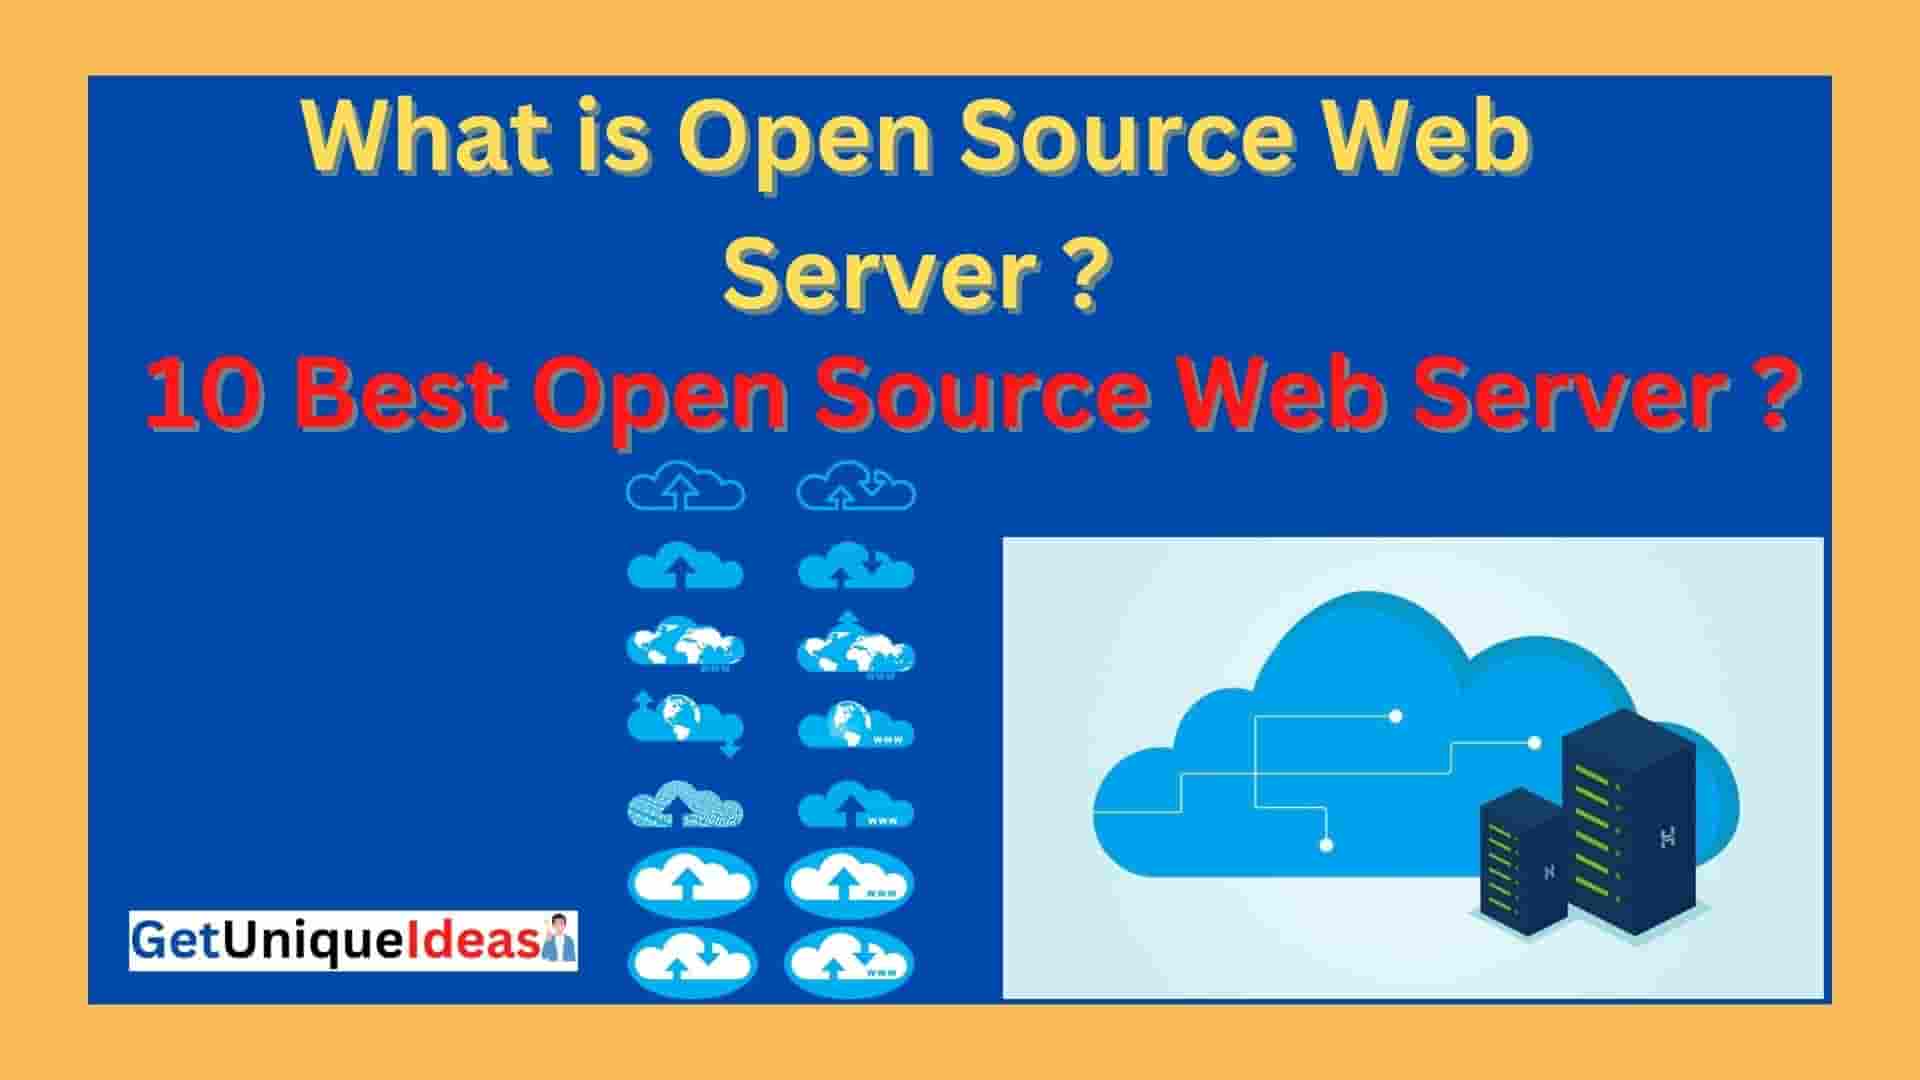 List of 10 Best Open Source Web Server